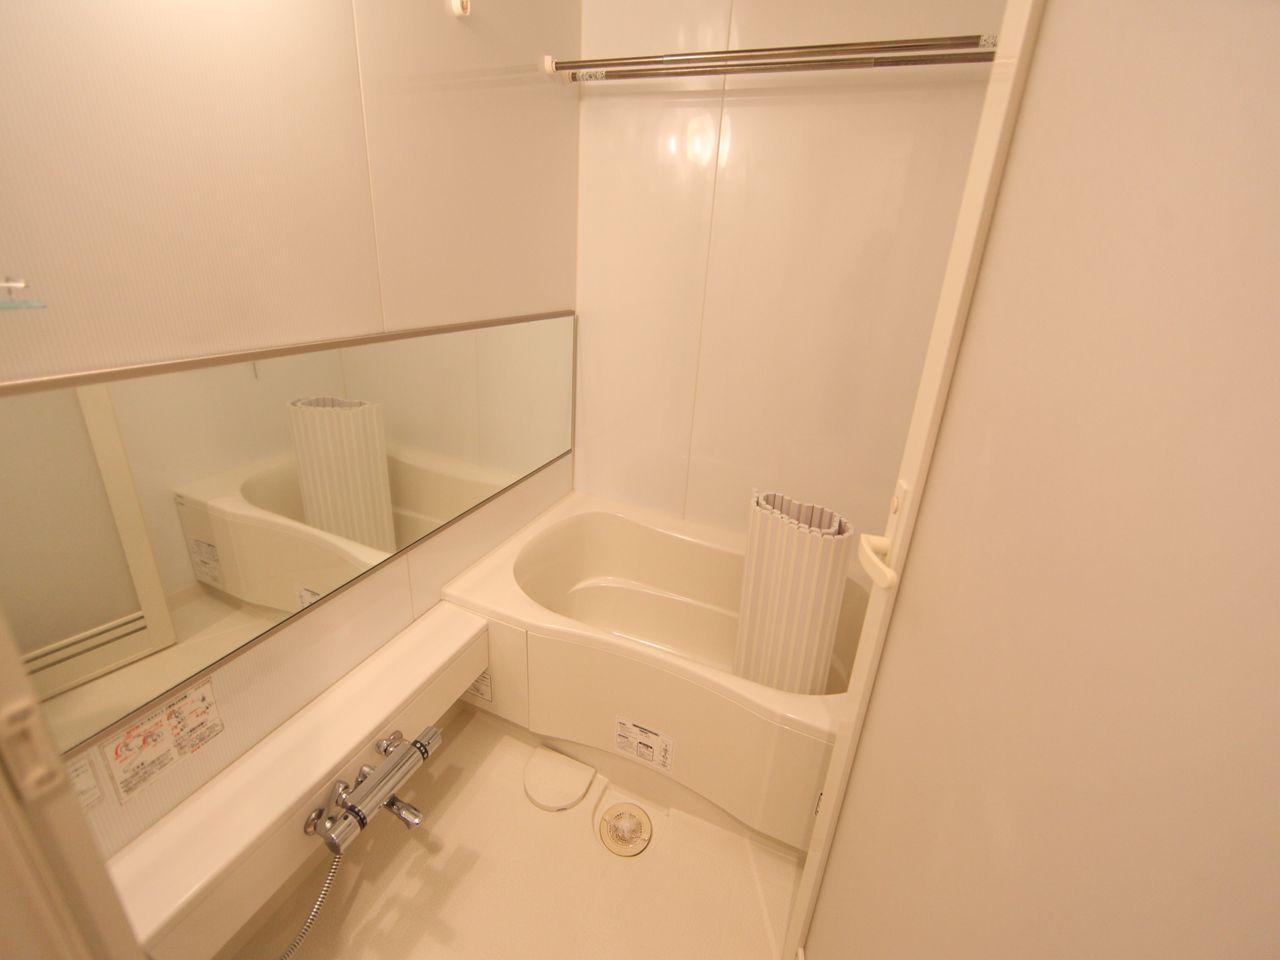 Bath. With reheating Bathroom with heating dryer With mist sauna With window